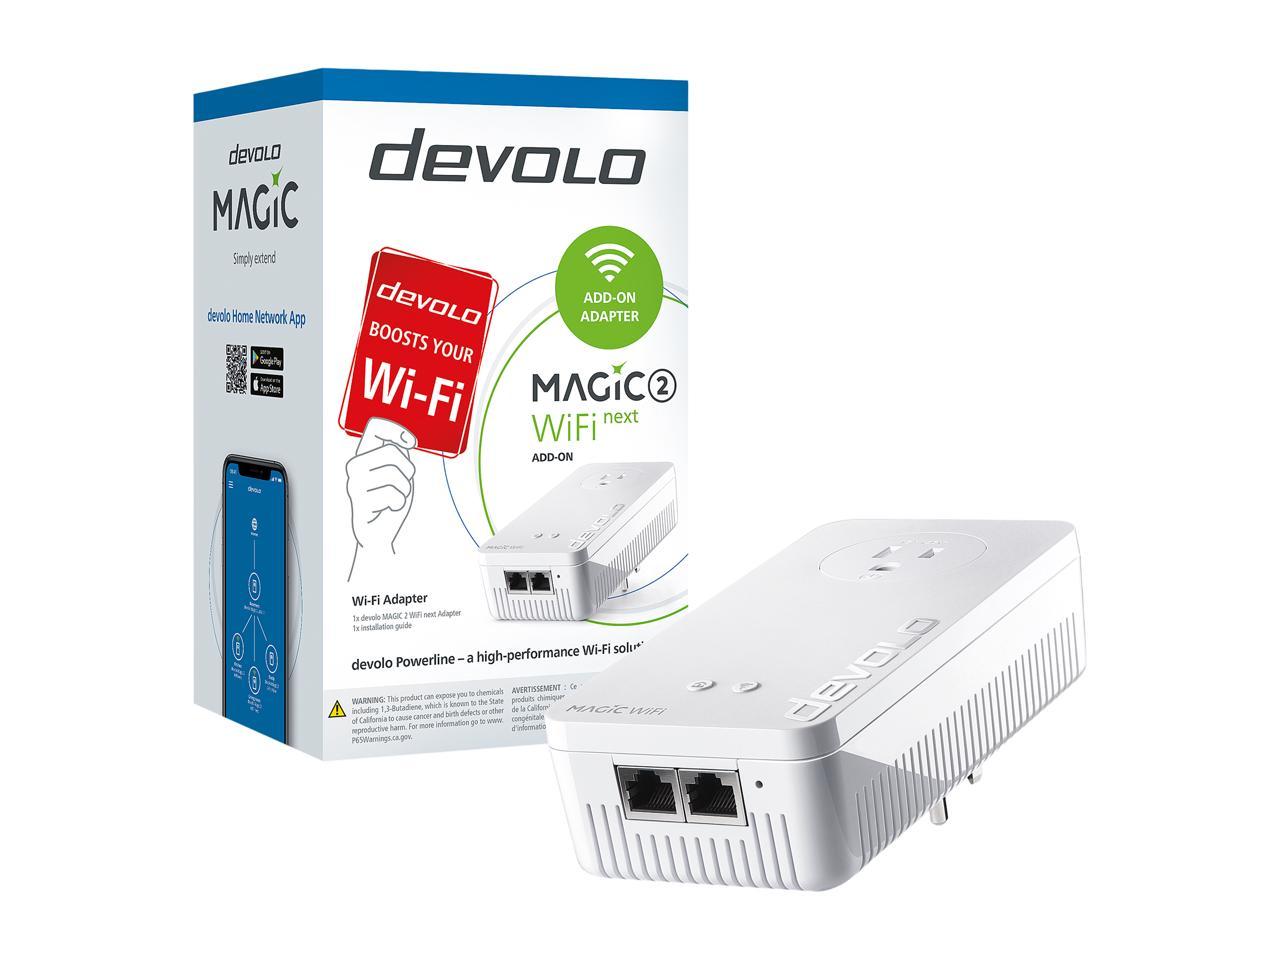 Regeren nemen Verslaggever devolo Magic 2 WiFi next Add-on WiFi Adapter - Newegg.com